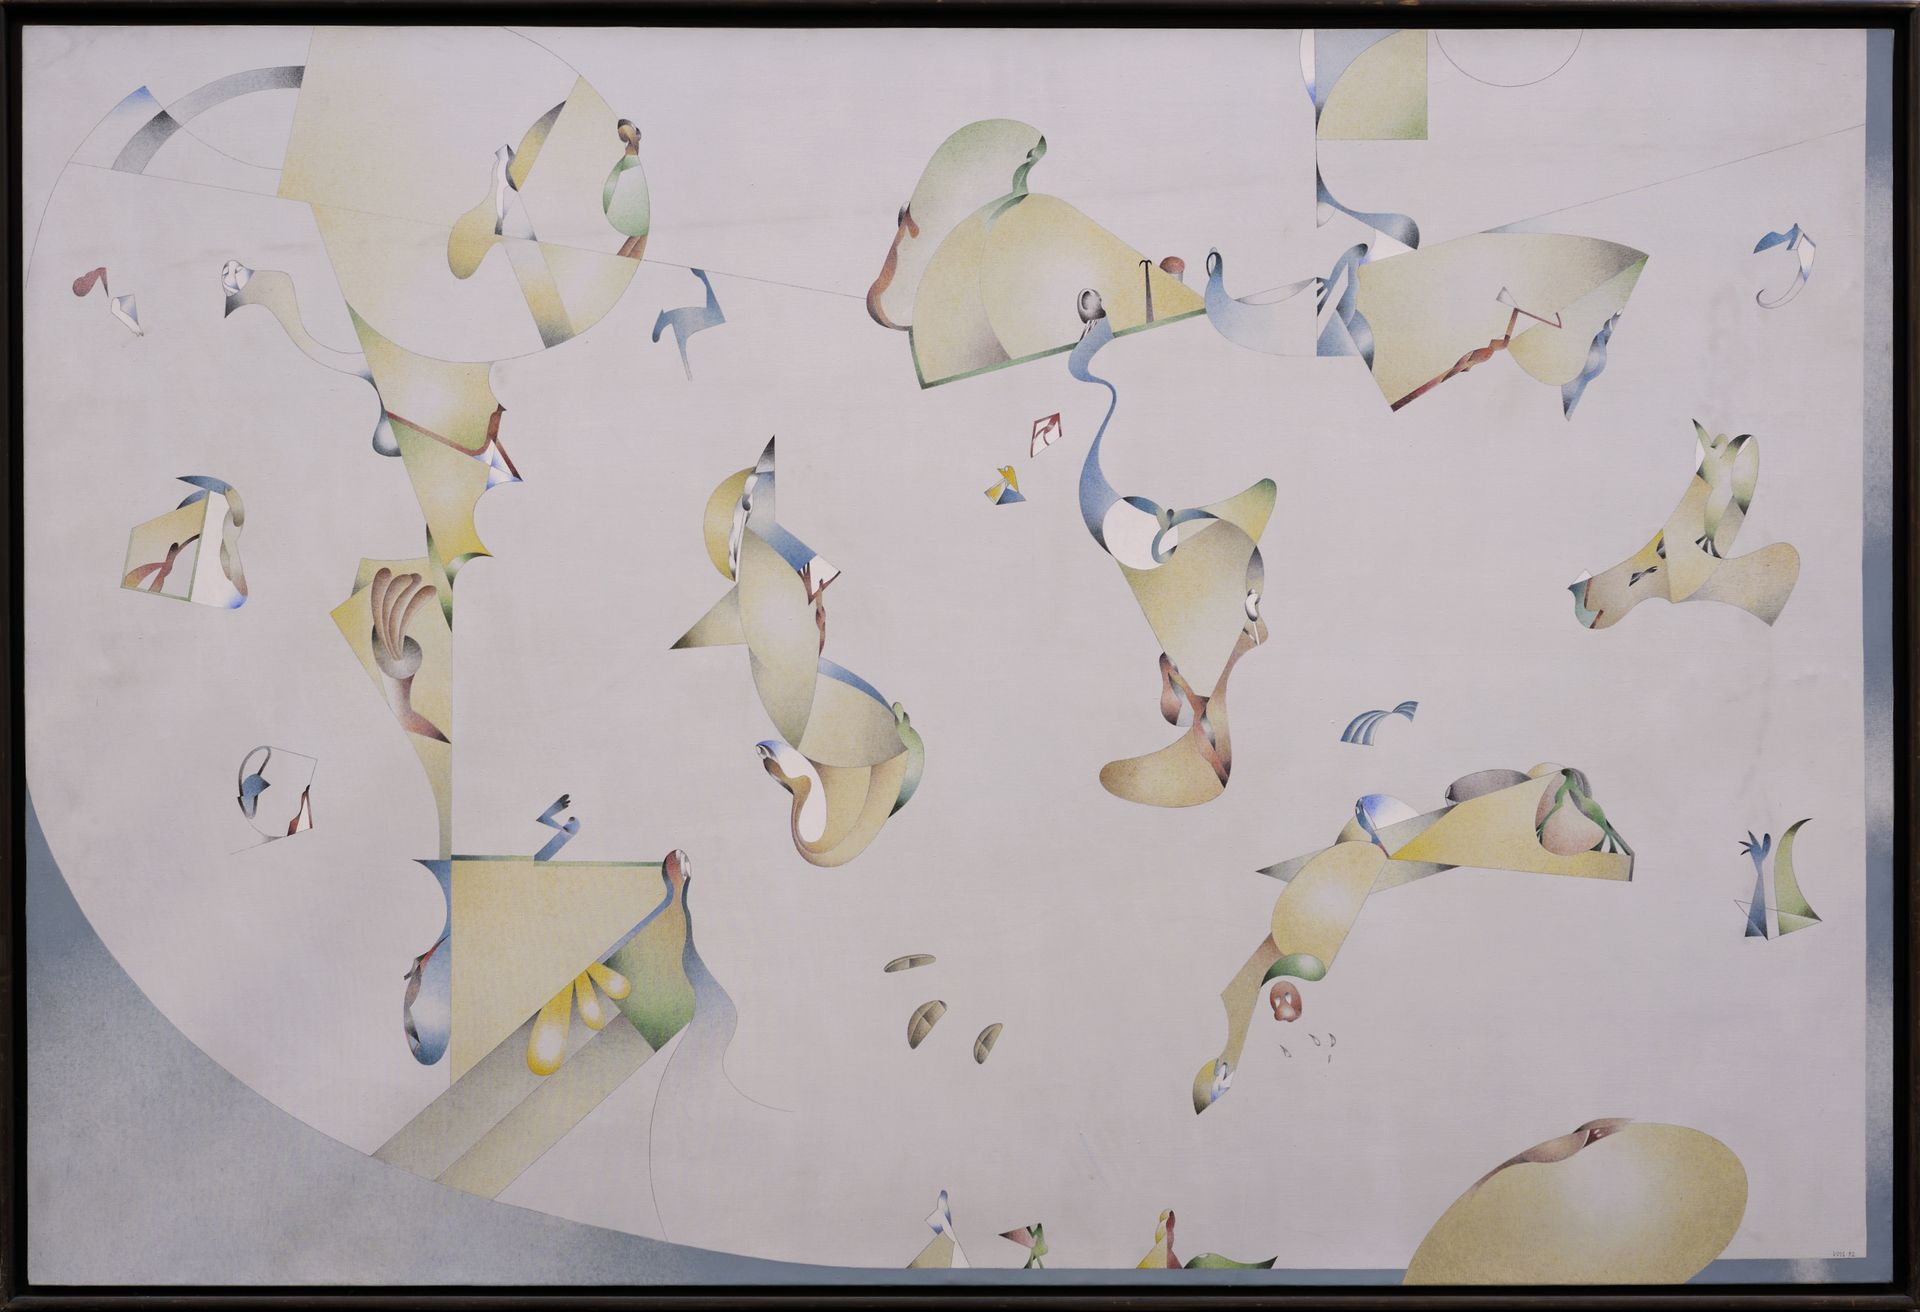 Jan Voss (né en 1936) 扬-沃斯（生于1936年

无名氏, 1972

布面油画，右下方有签名和日期。

195 x 290 厘米

出处&hellip;